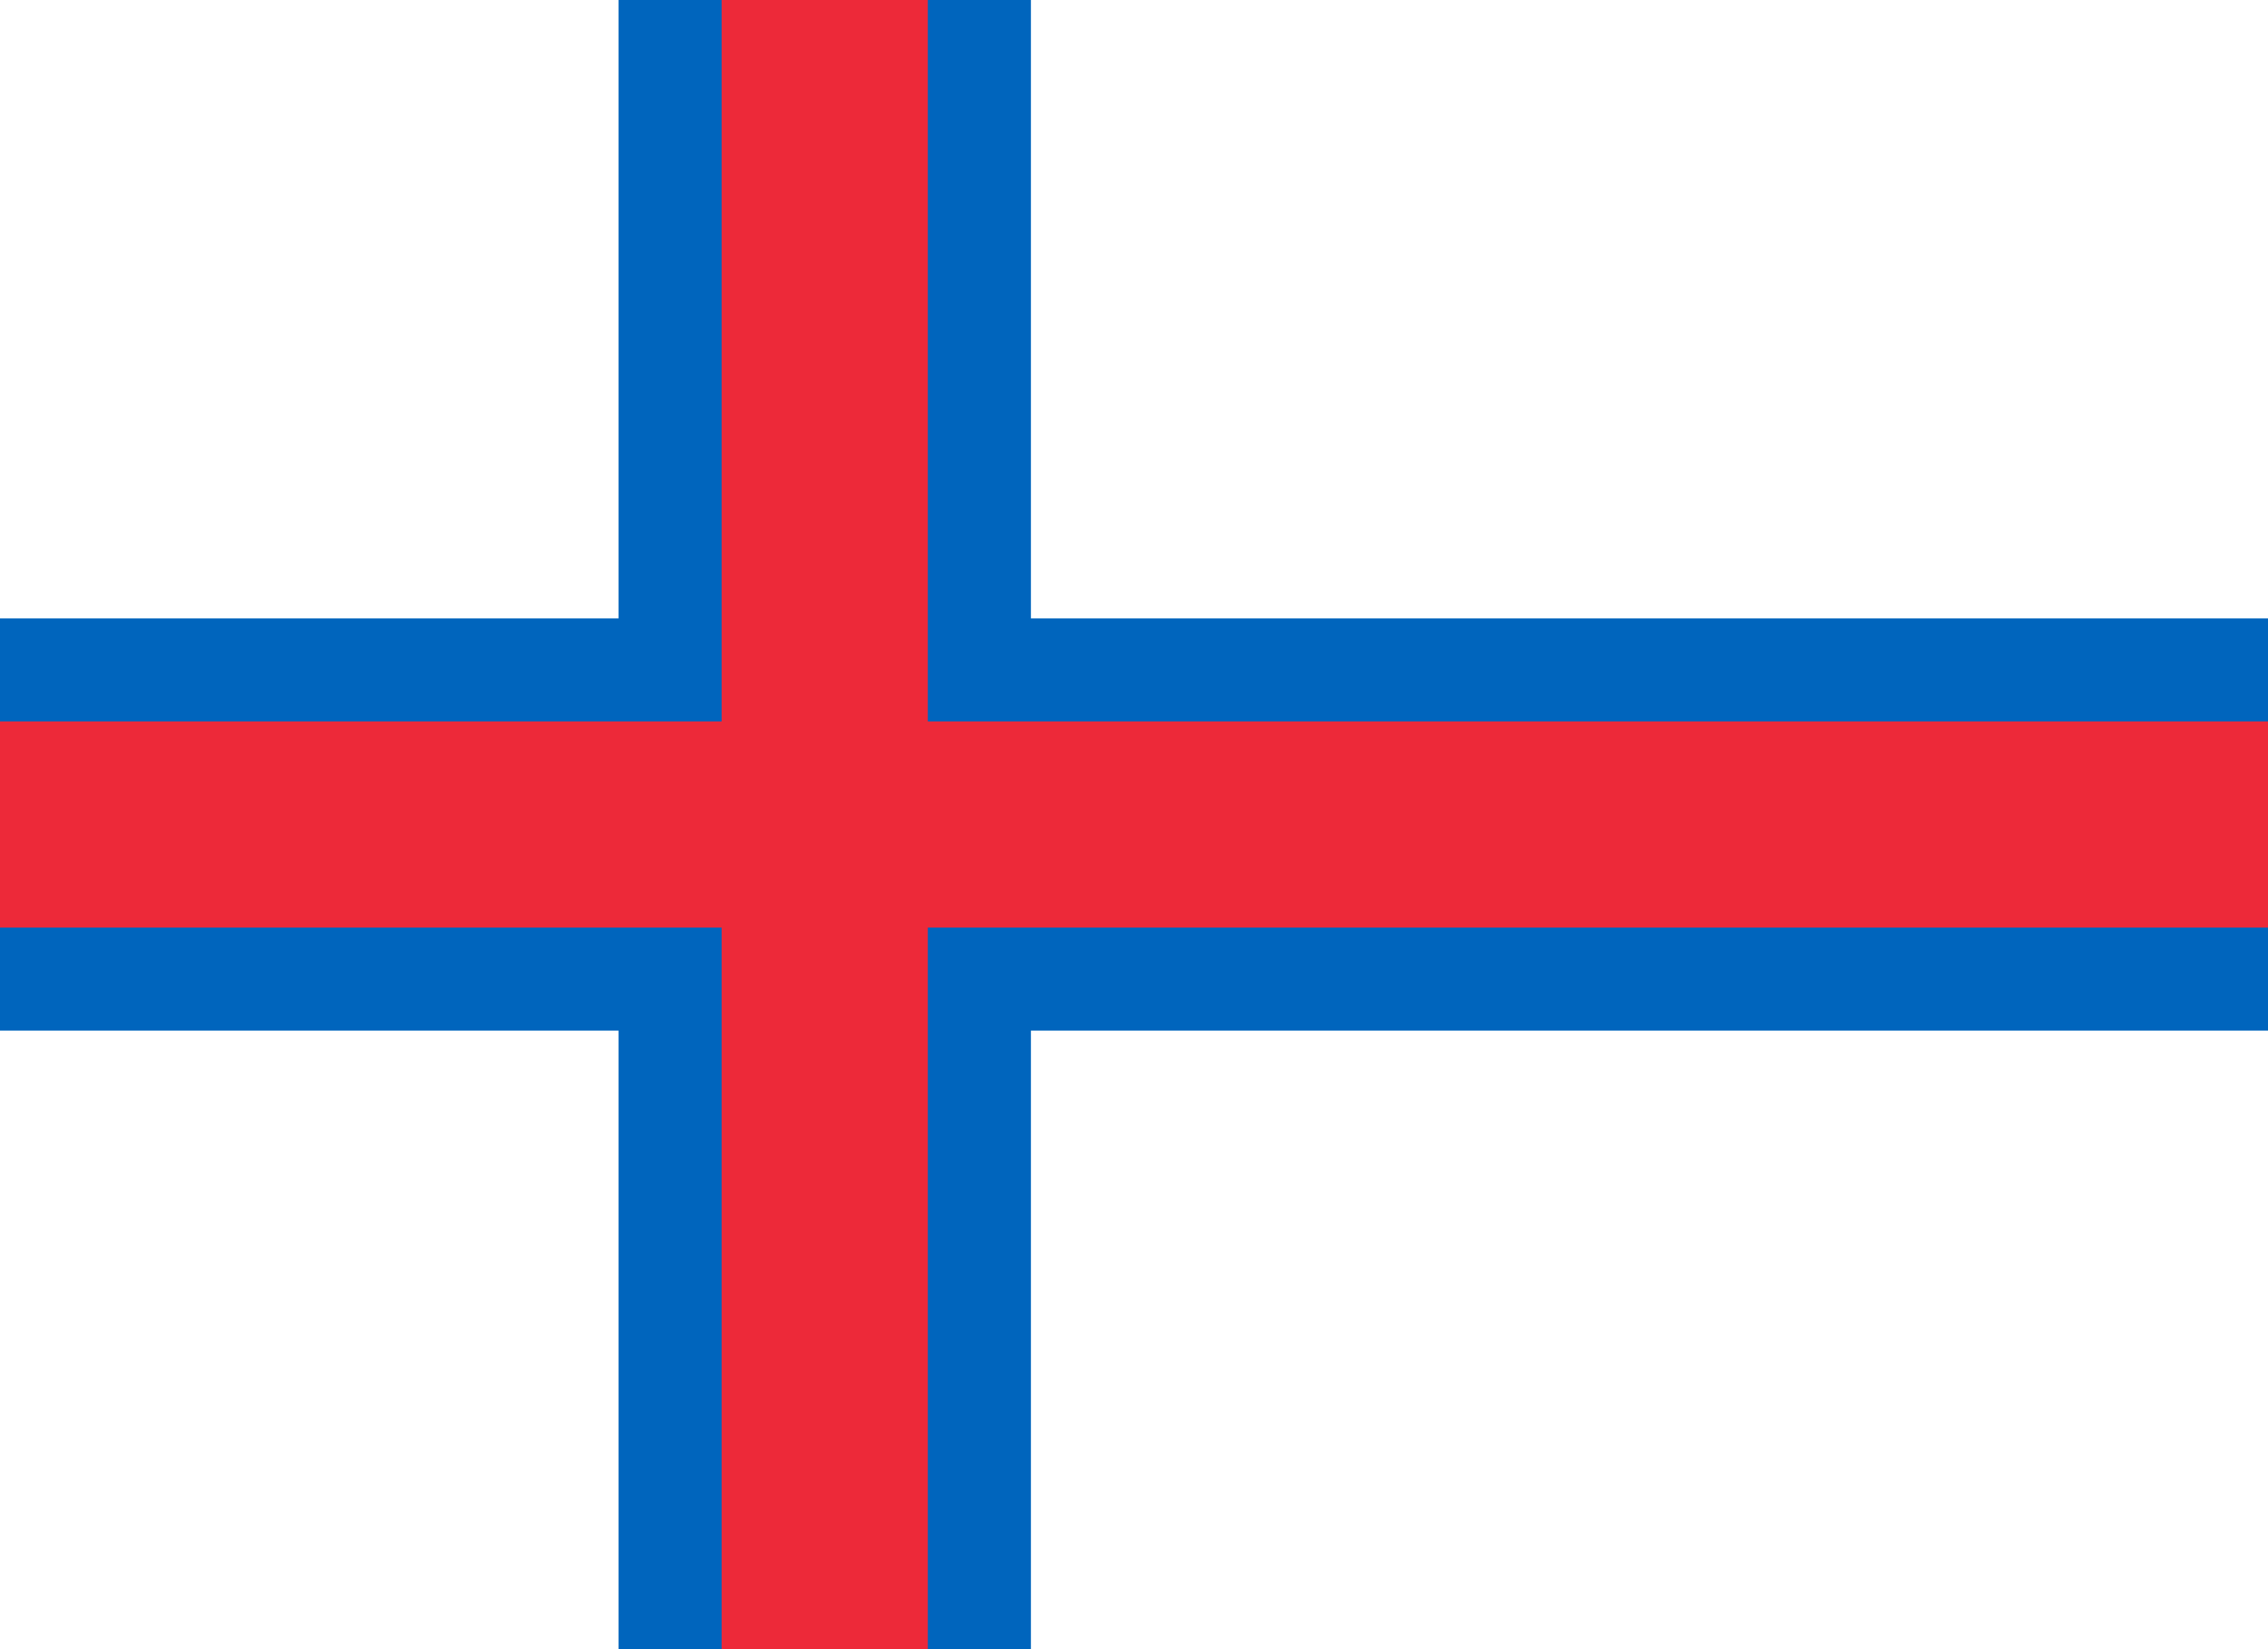 The Faroe Islands Flag Image - Free Download